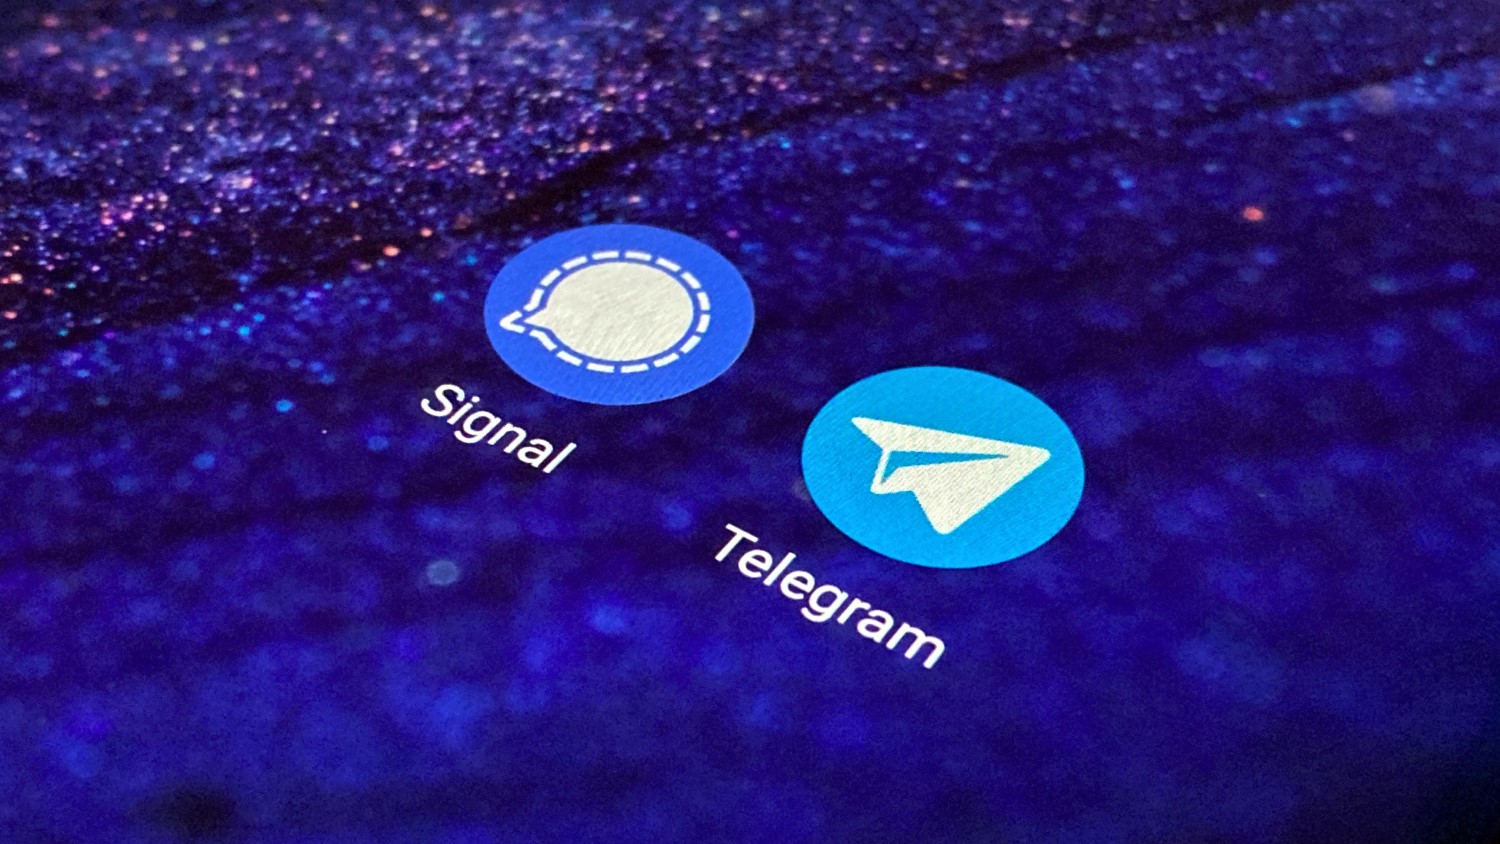 Dovresti passare a Telegram o Signal?